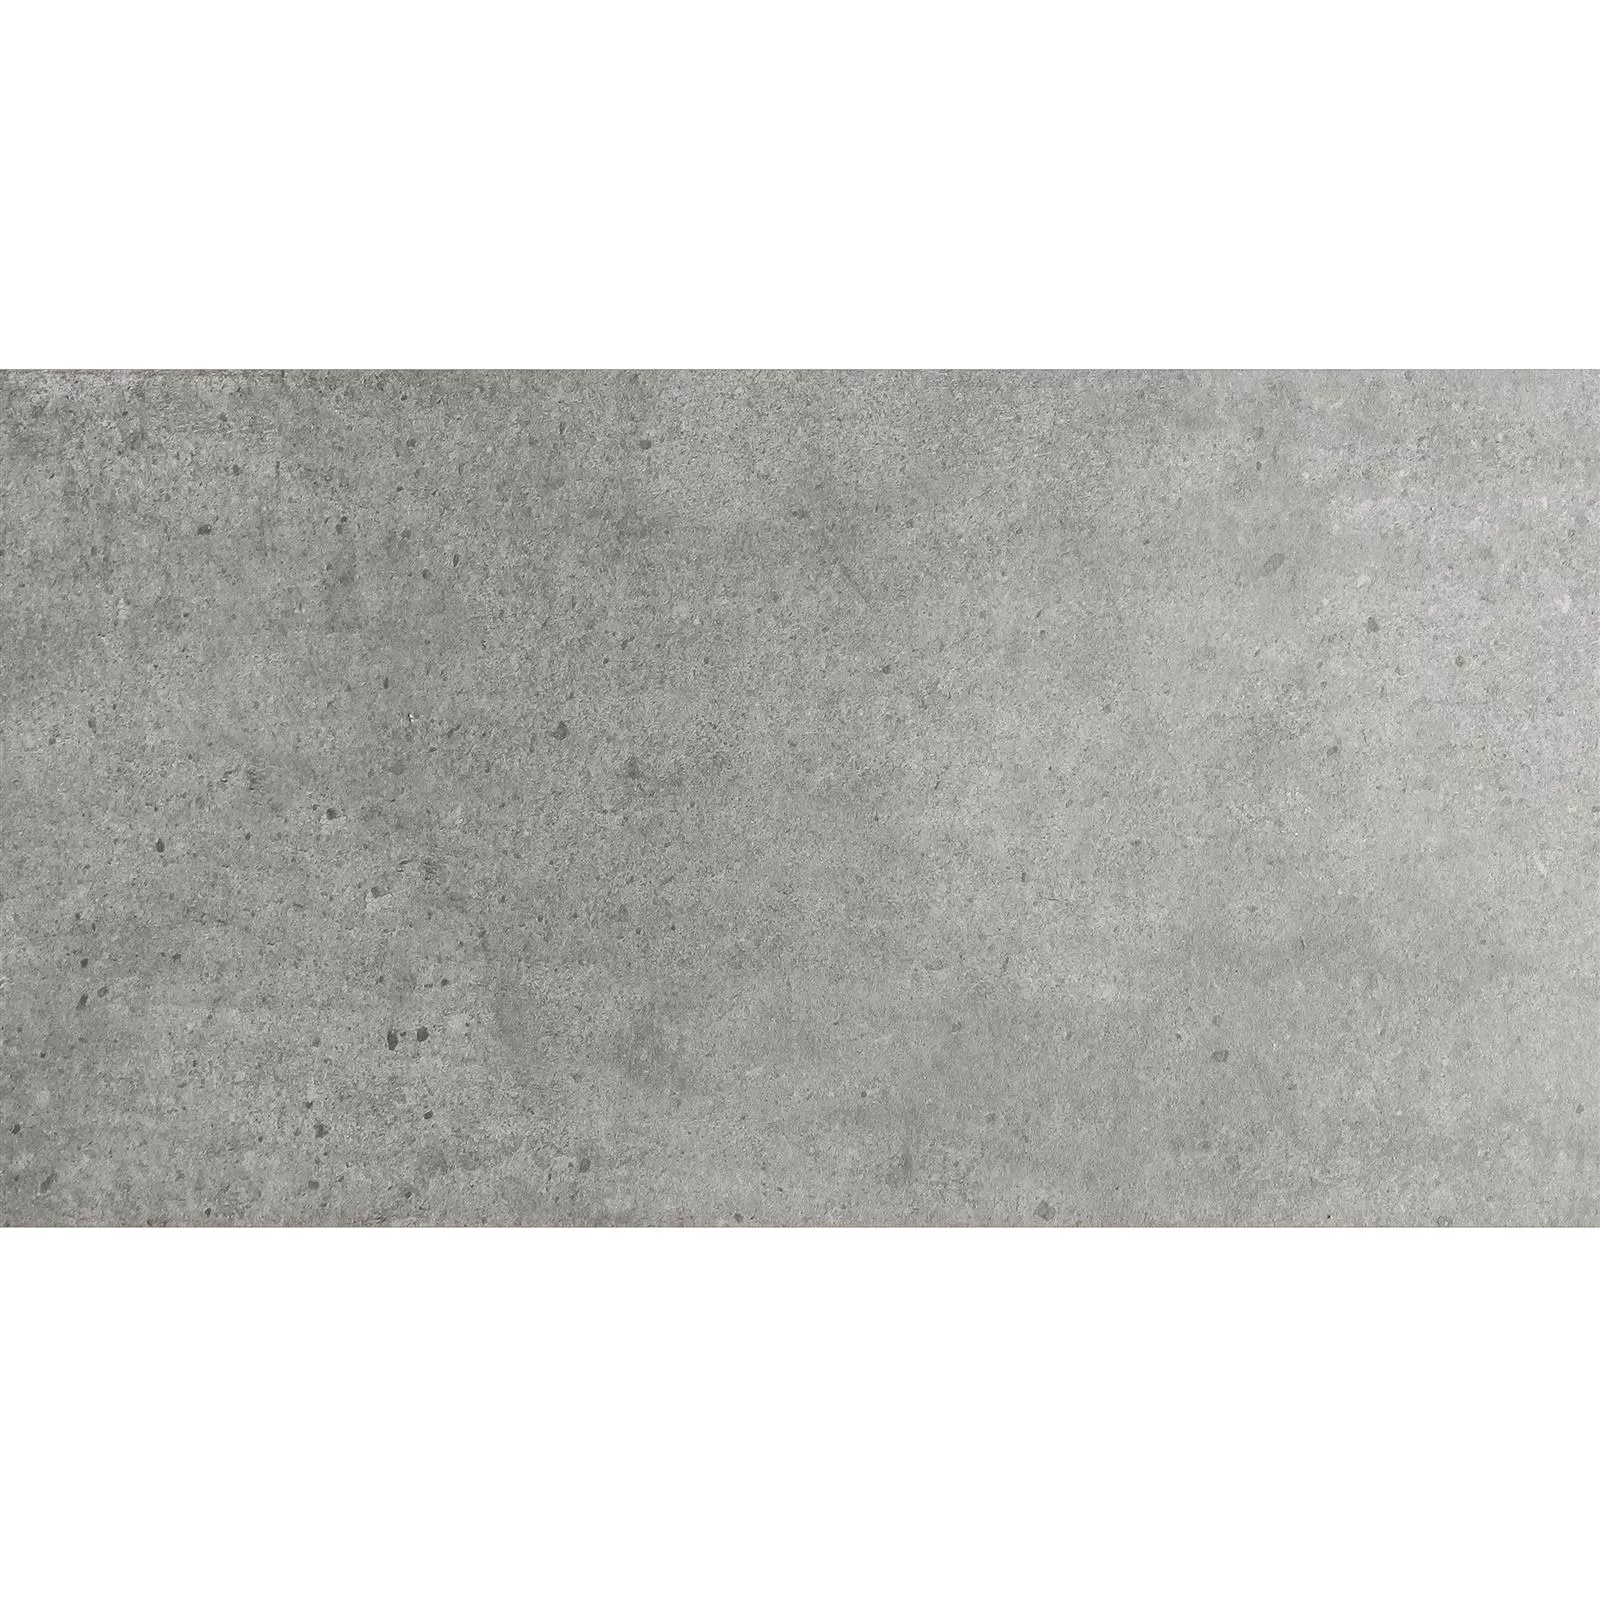 Próbka Płytki Podłogowe Kamień Optyka Despina Szary 30x60cm